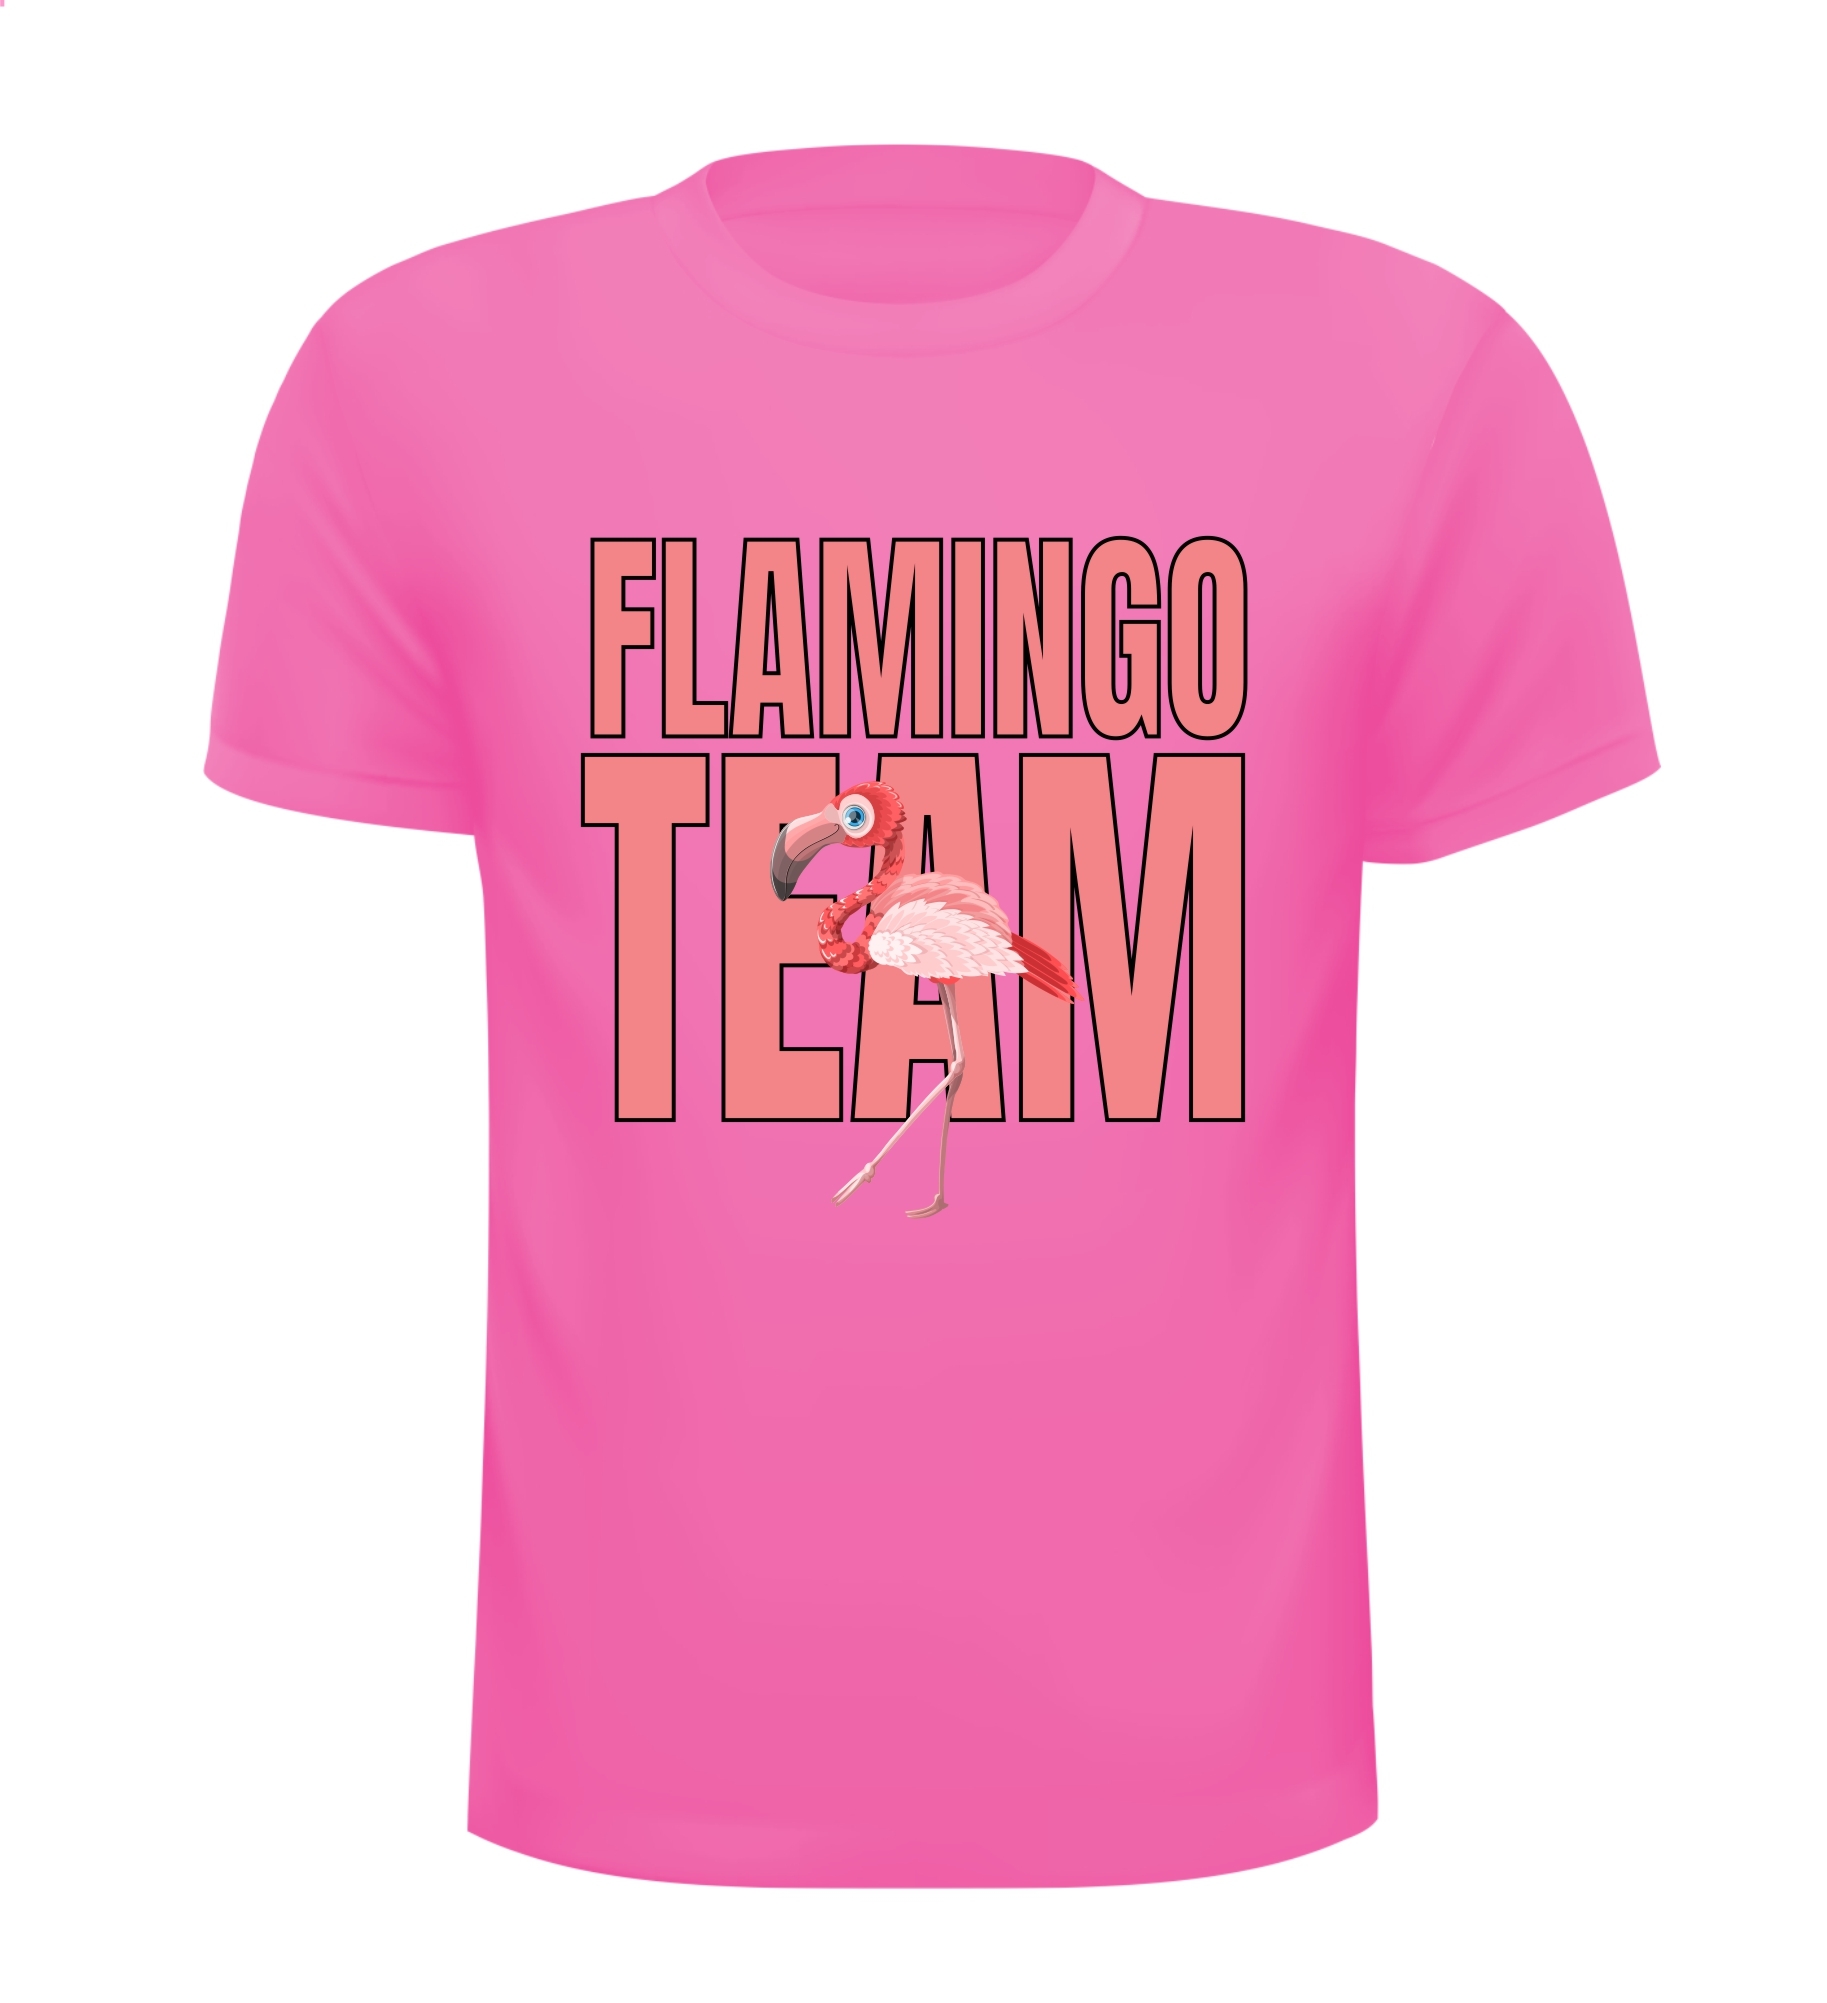 Grappig flamingo shirt voor team flamingo